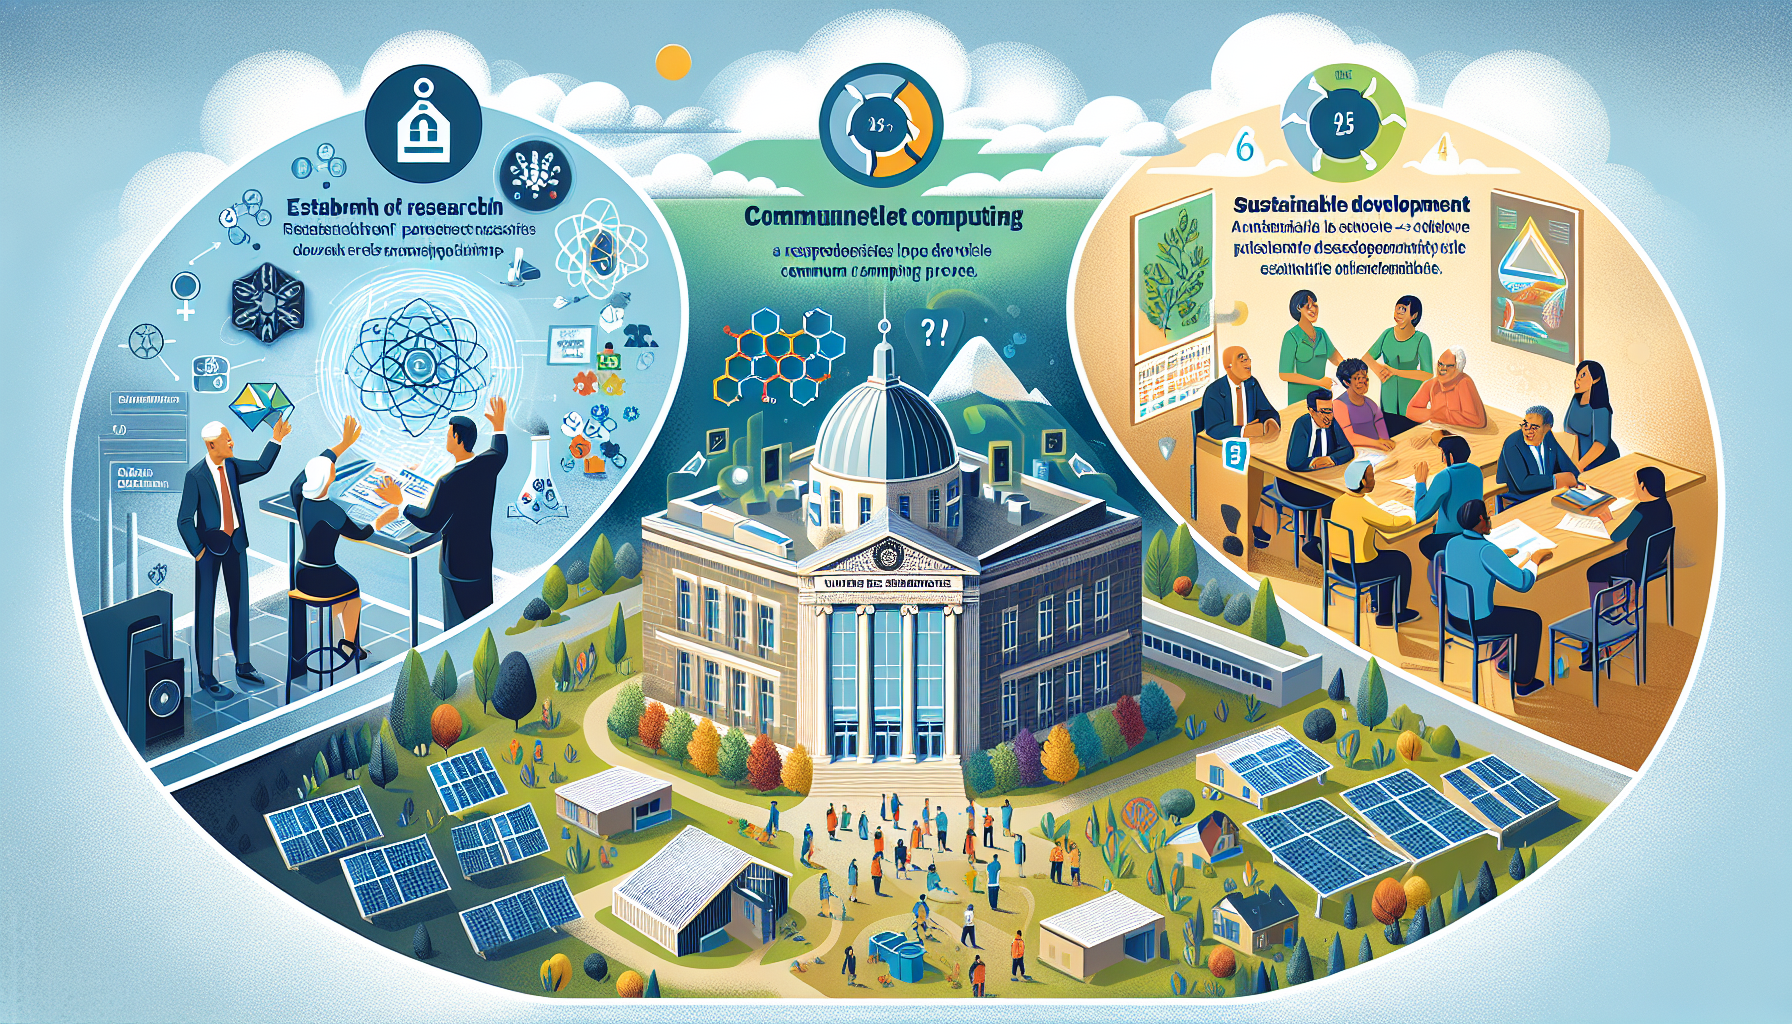 Université de Sherbrooke's Advances in Research, Community Engagement and Sustainability Recognitio